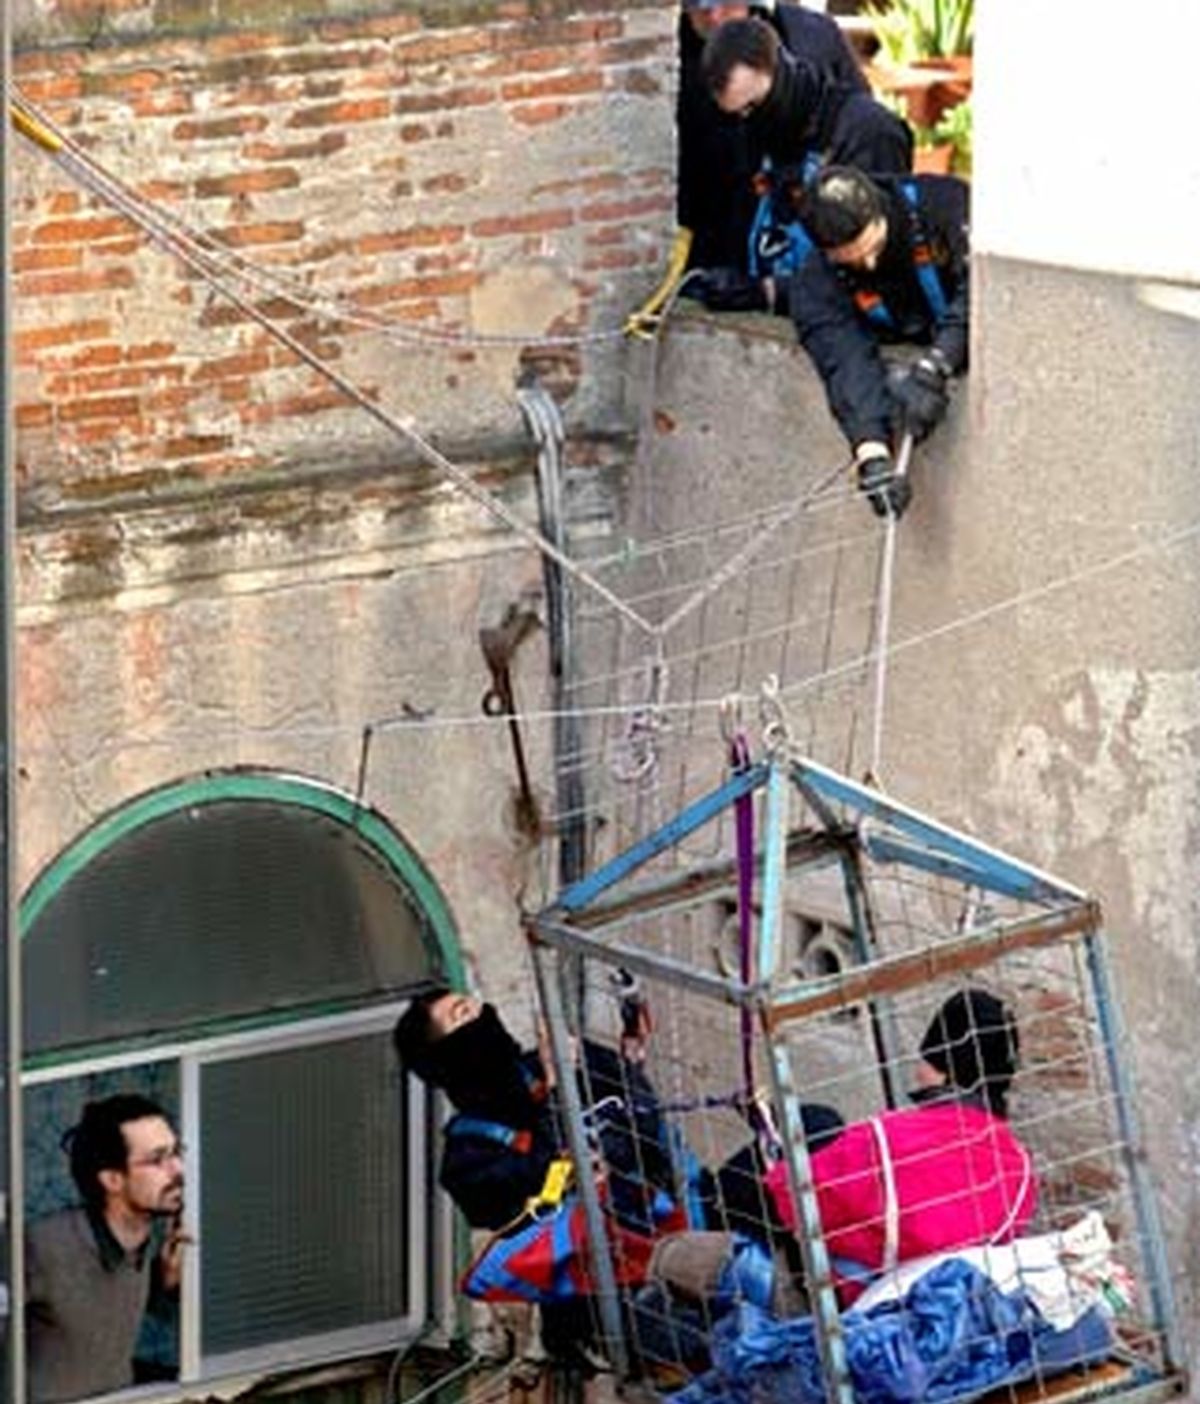 Varios mossos d'esquadra tratan de soltar a un joven que se ha encerrado en un jaula colgada en el patio interior. Foto: EFE.